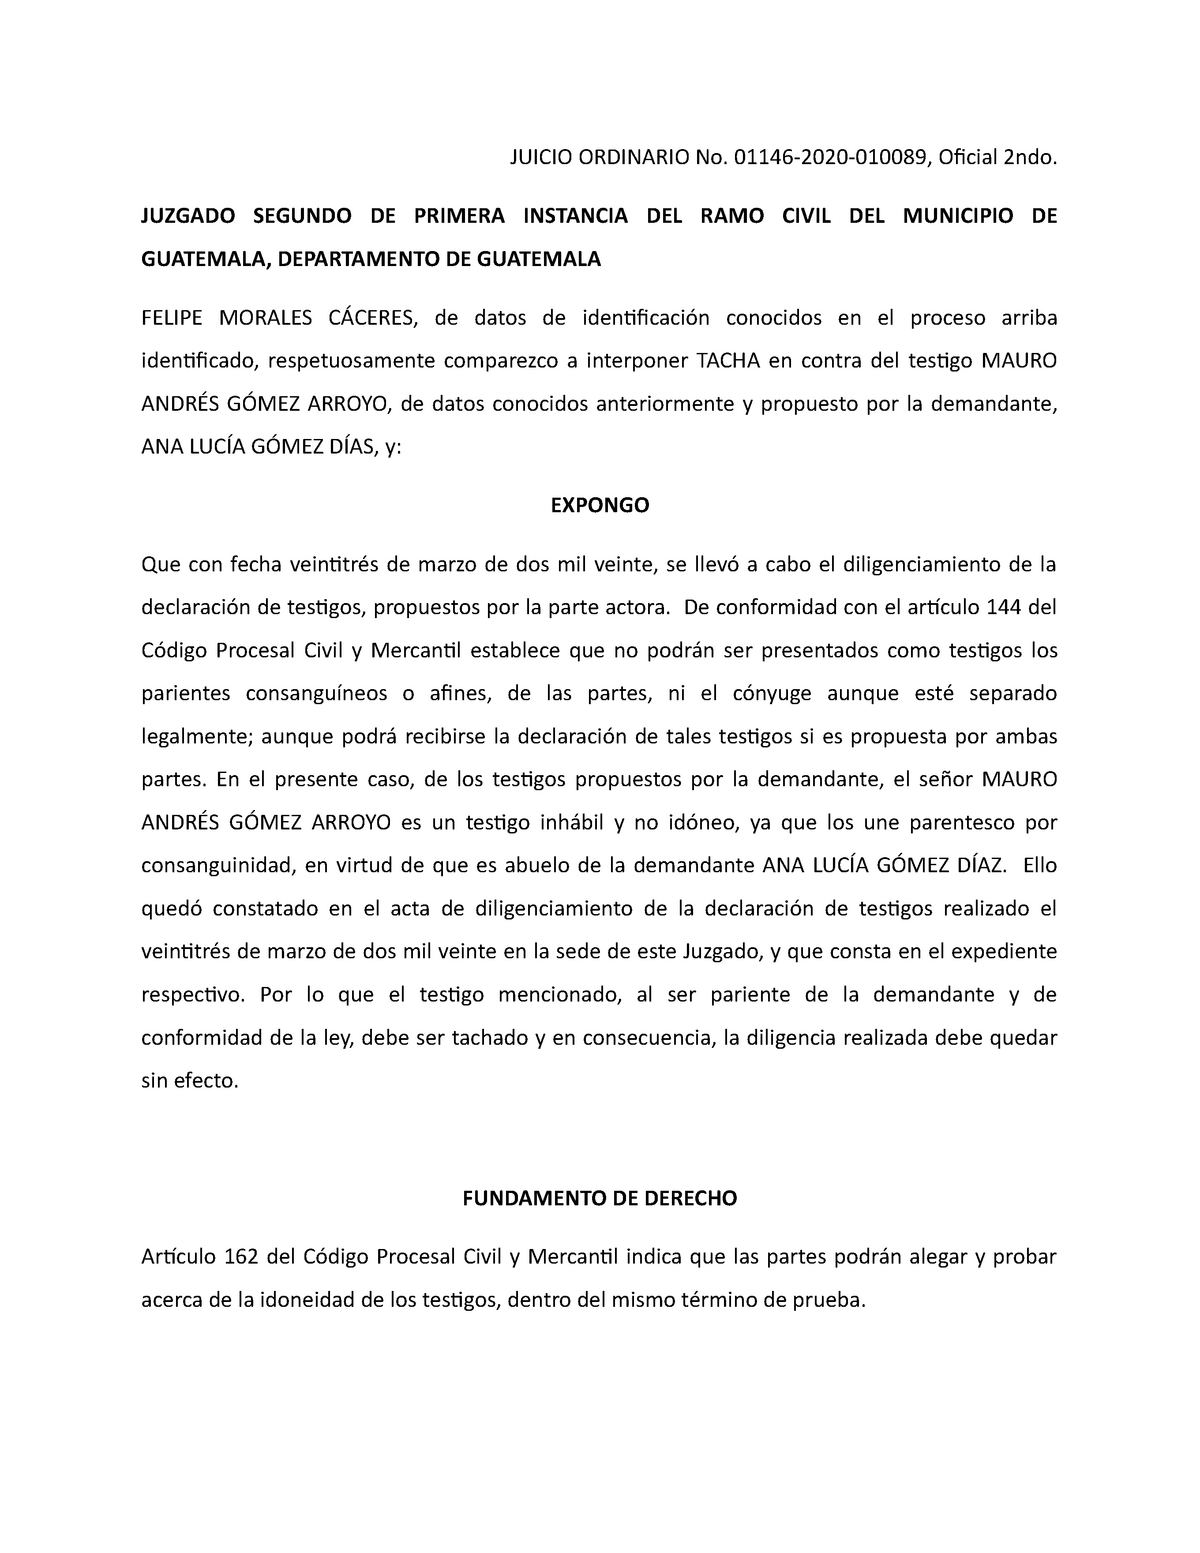 Memorial DE Tacha DE Testigos - JUICIO ORDINARIO No. 01146-2020-010089,  Oficial 2ndo. JUZGADO - Studocu